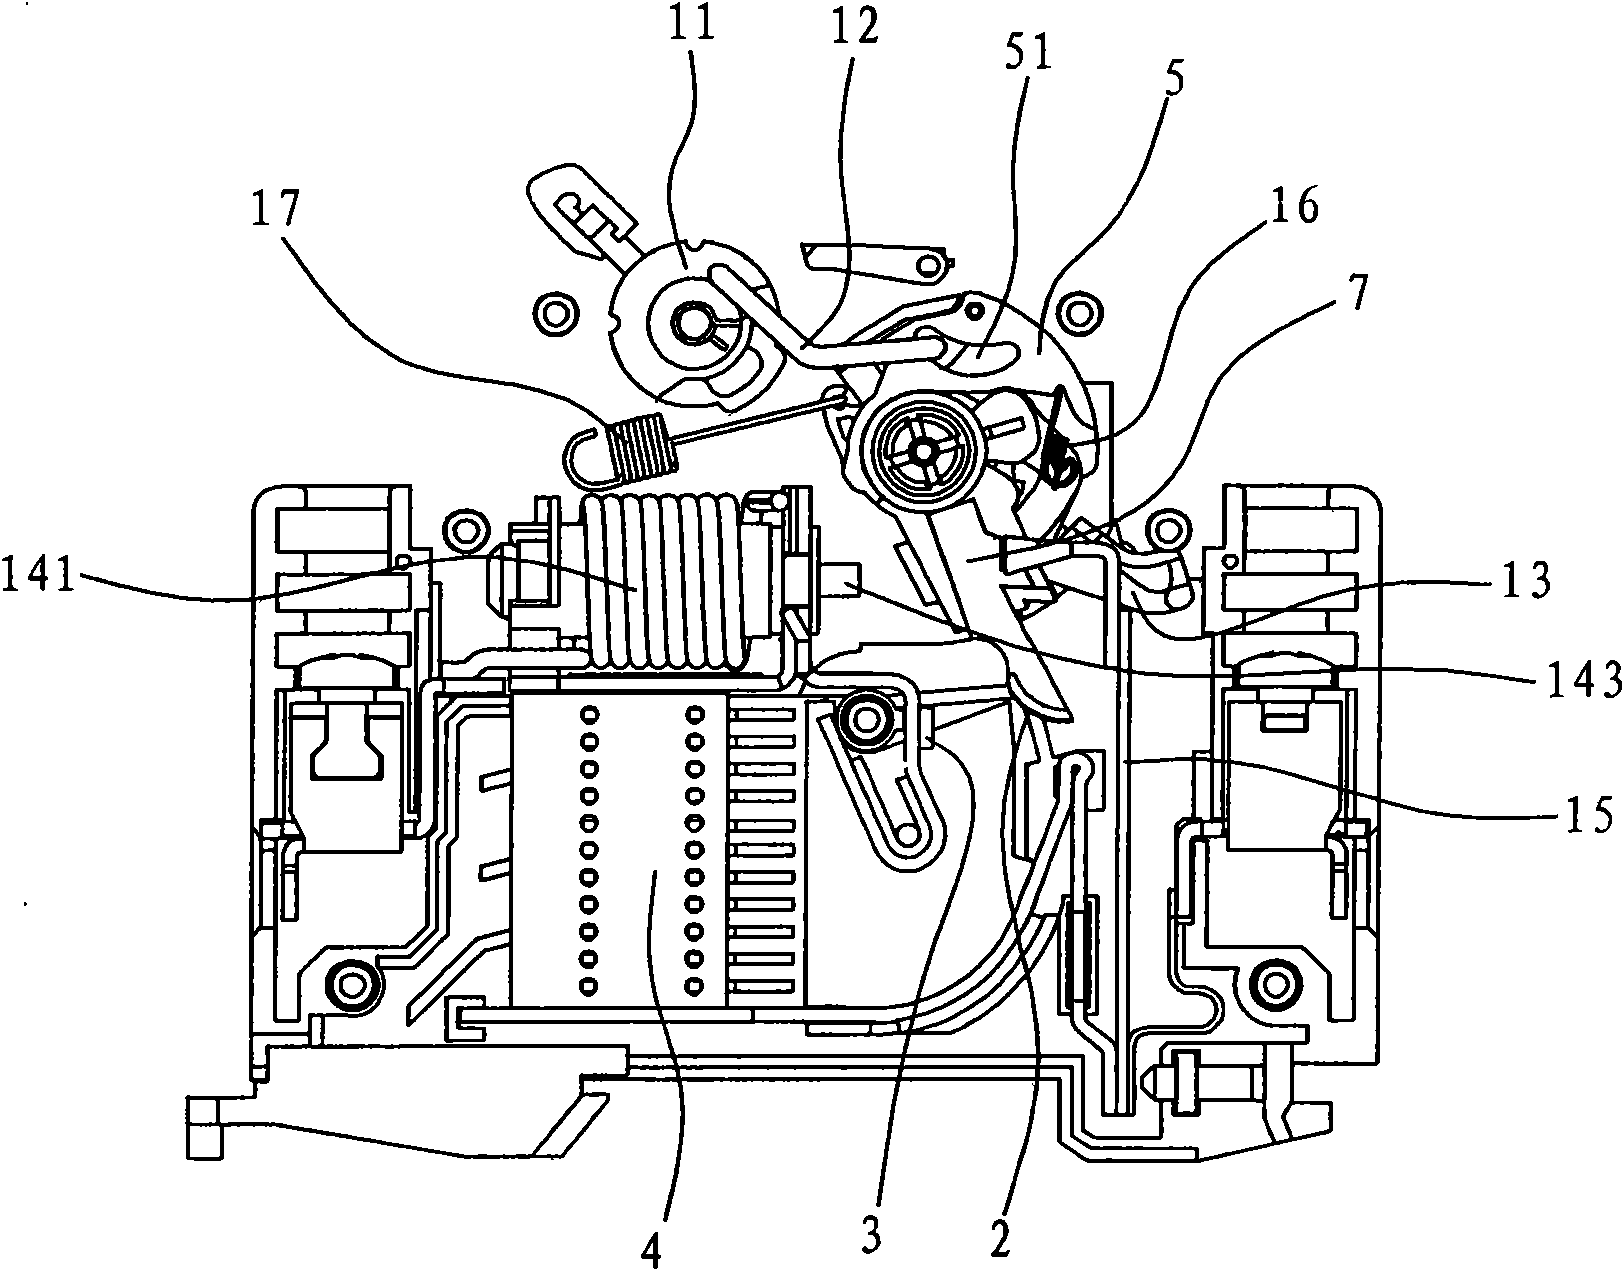 Improved circuit breaker